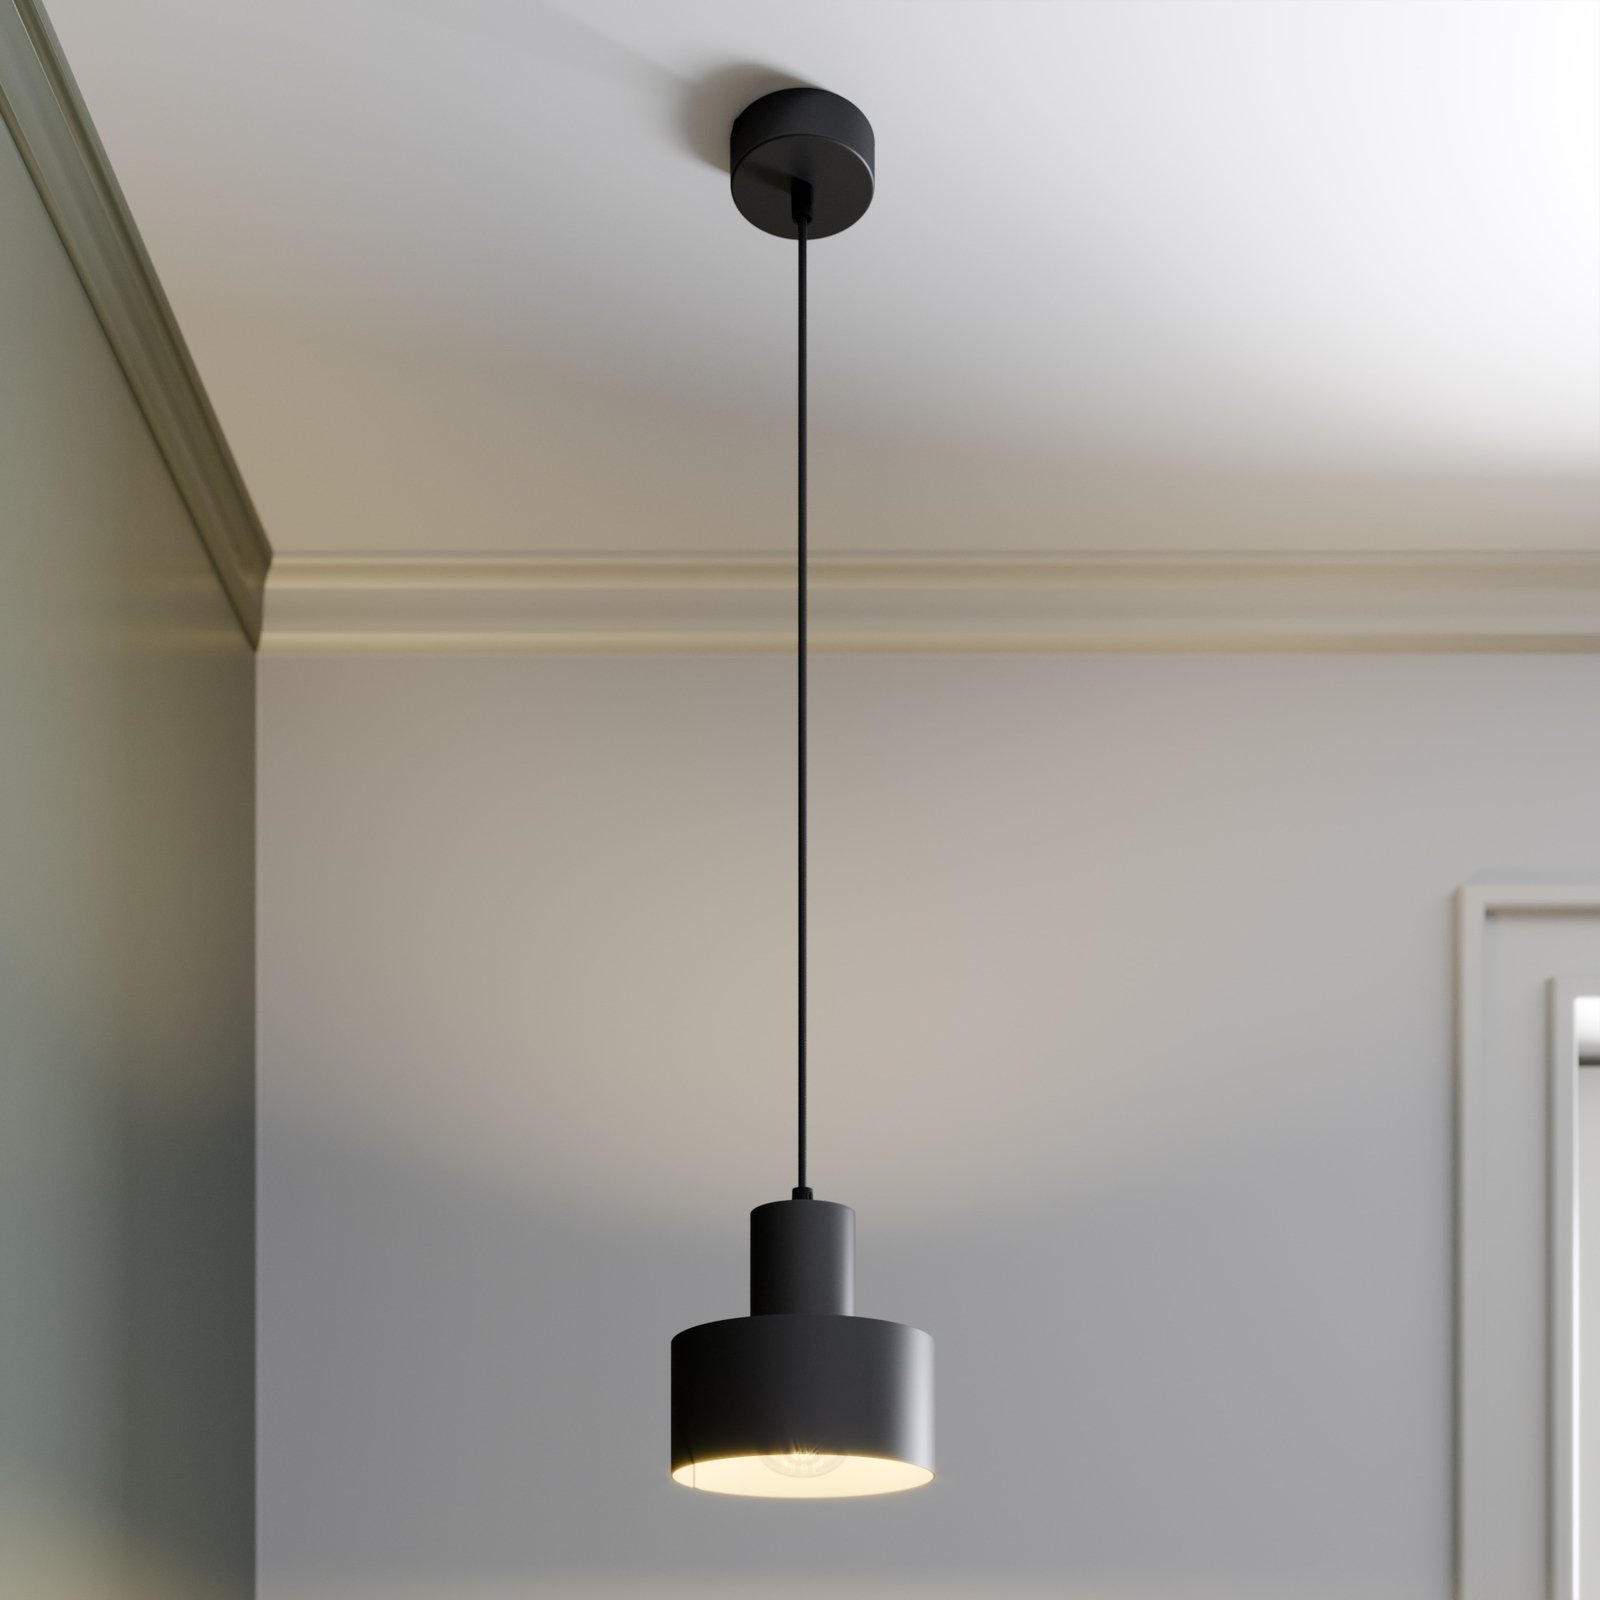 Rif hanging light made of metal, black, Ø 15 cm